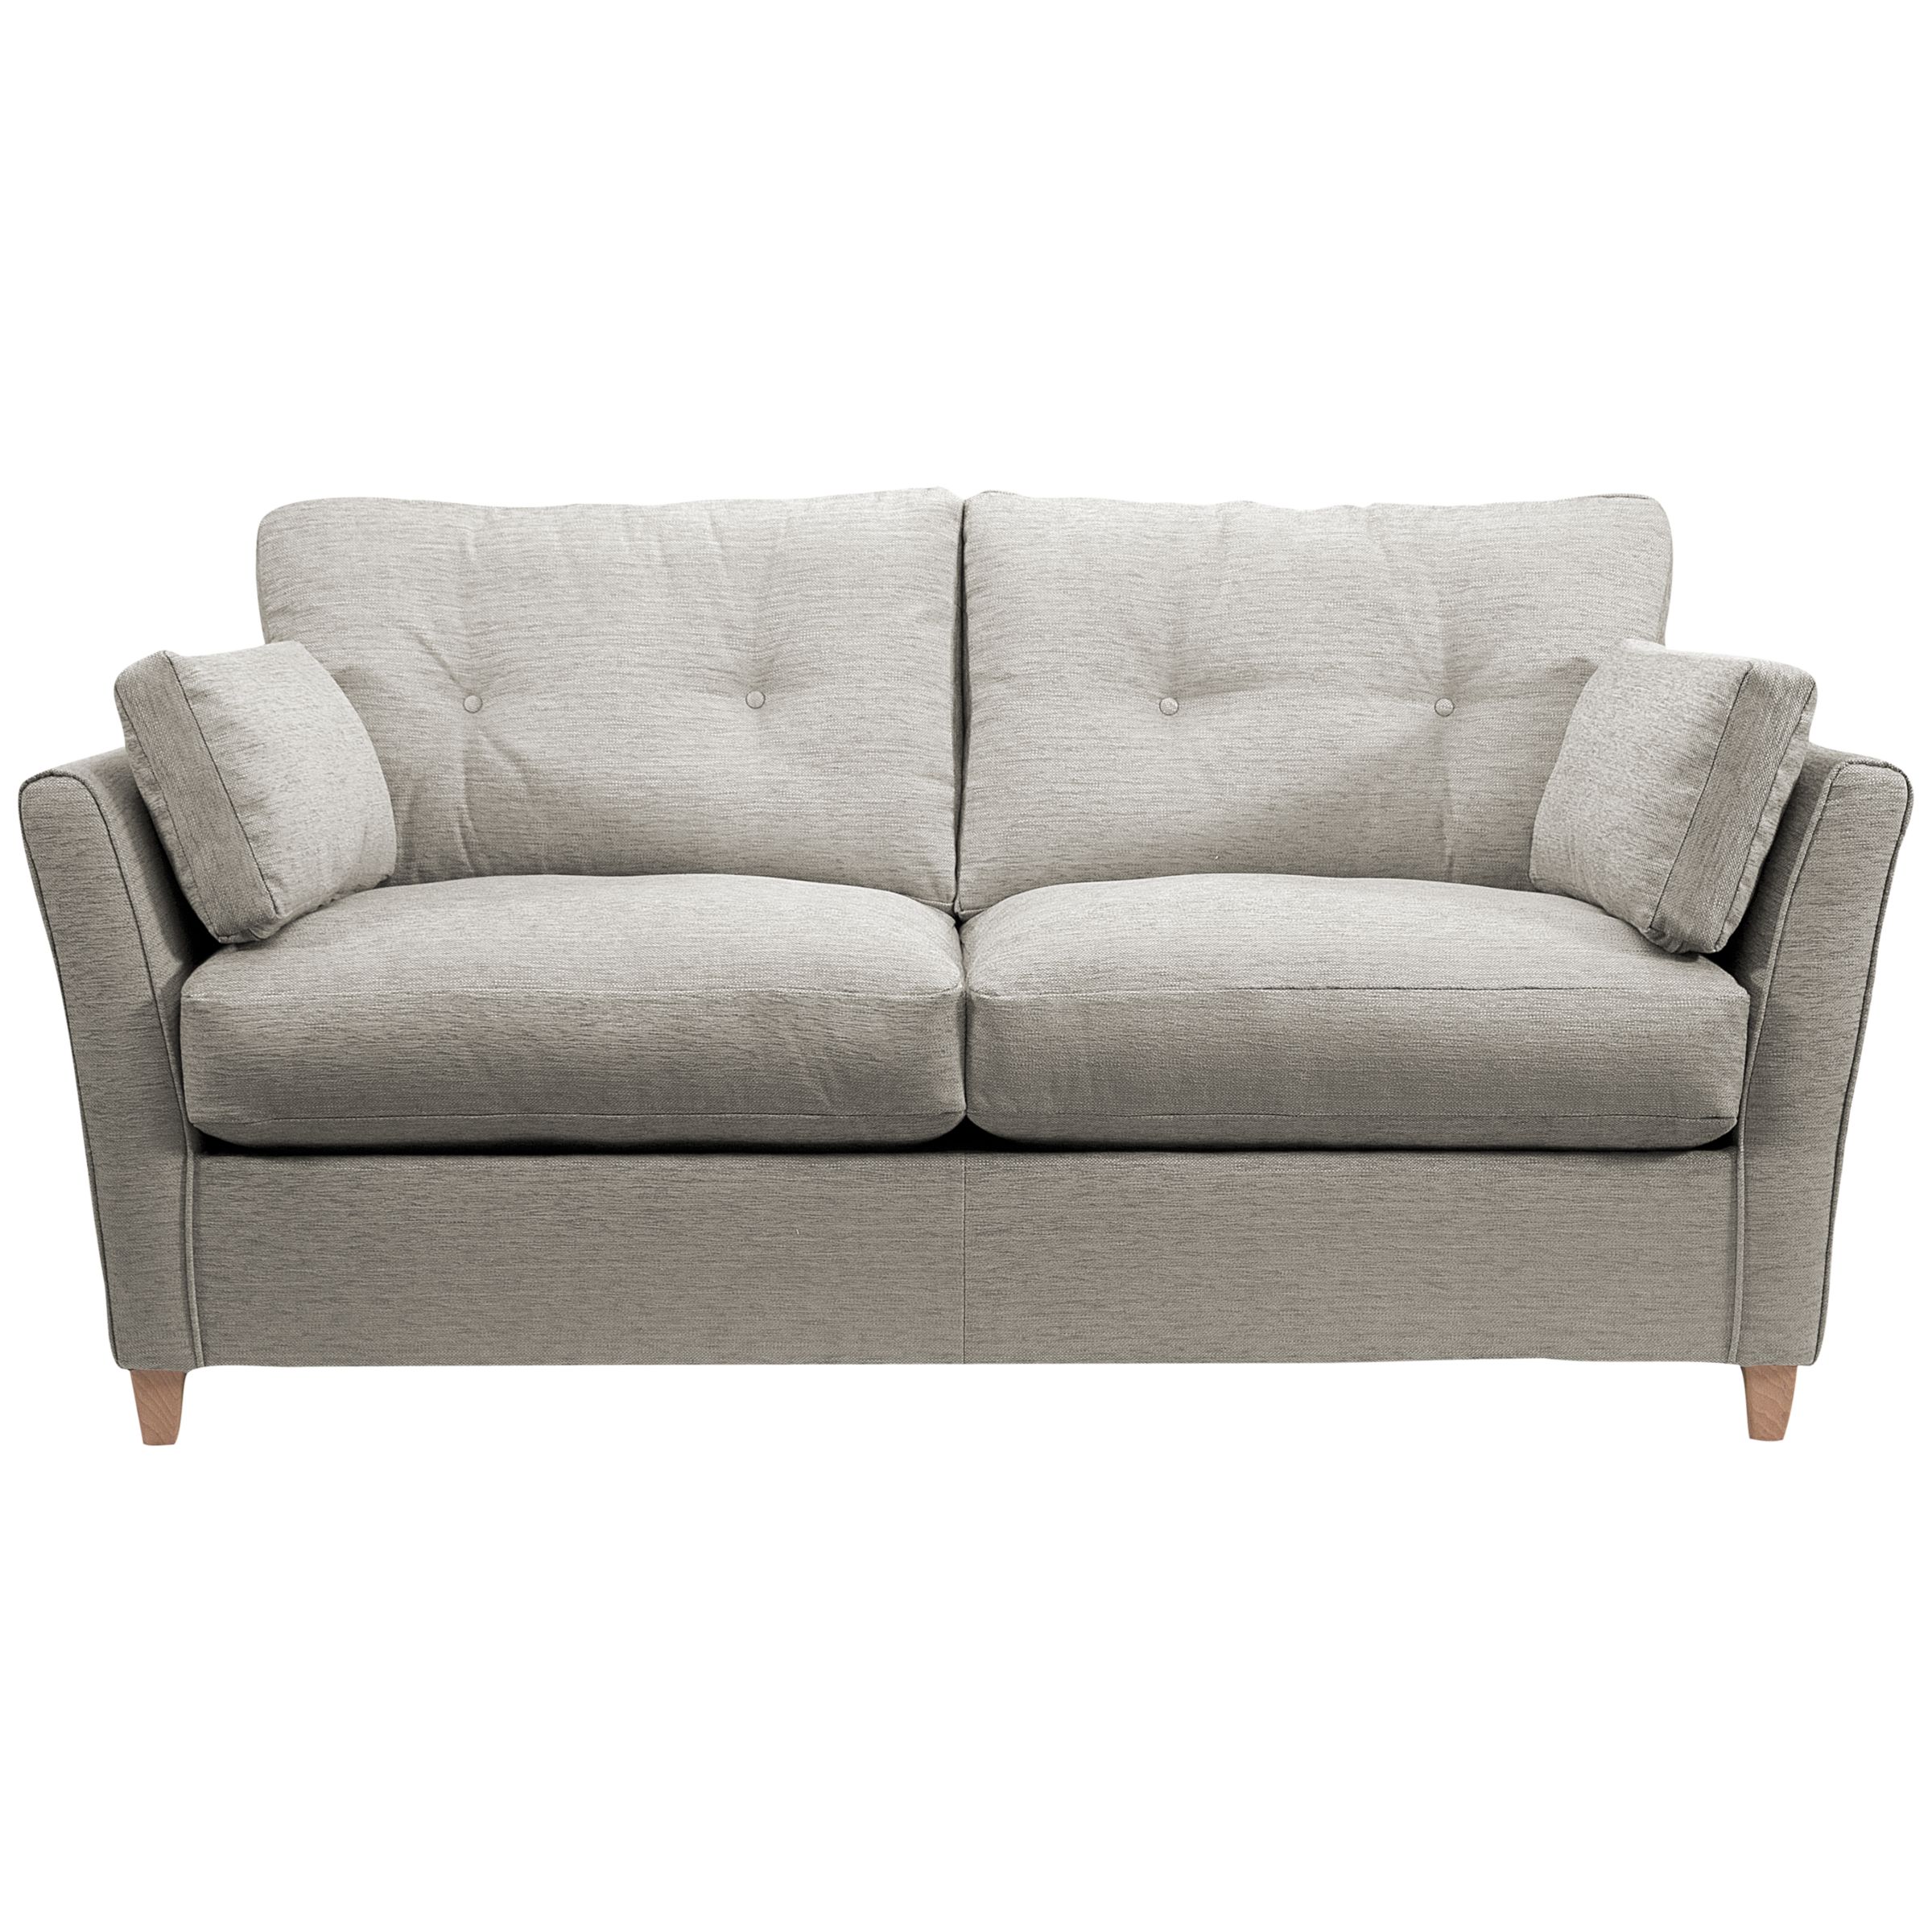 John Lewis Chopin Medium Sofa, Silver, width 184cm